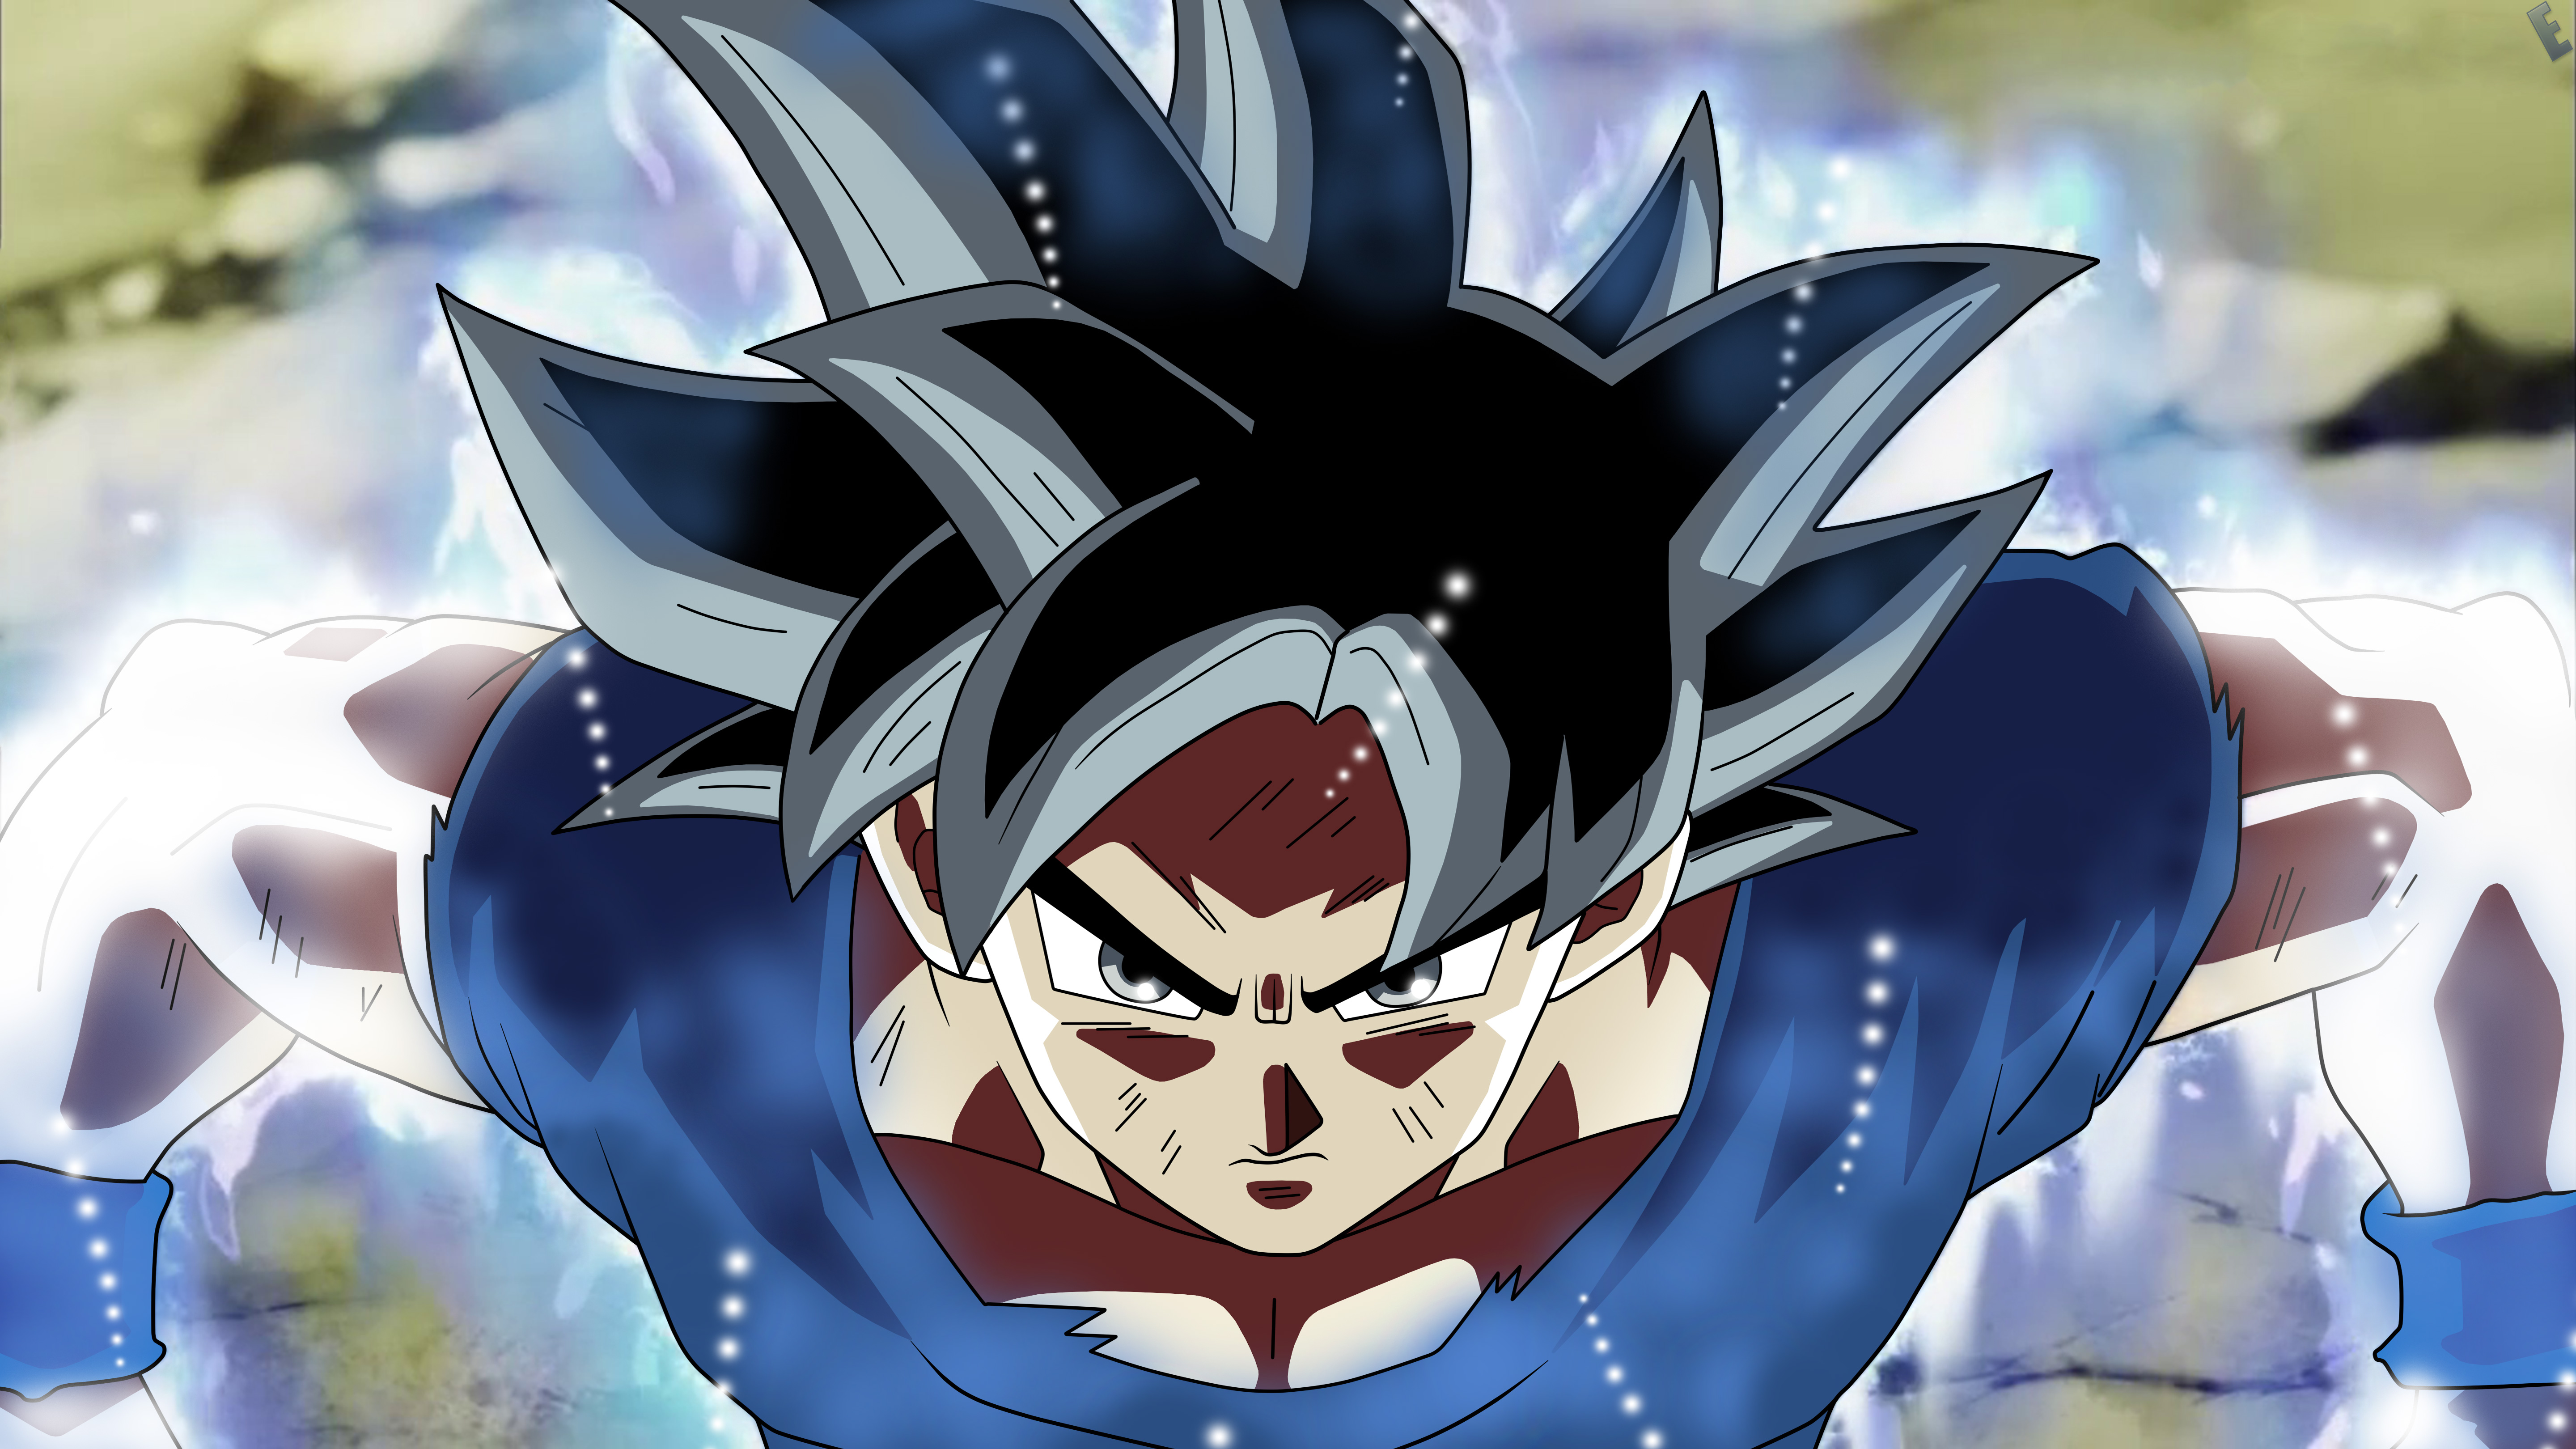 Goku Animated Wallpaper 4K - 1440x900 Goku 1440x900 Wallpaper, HD Anime ...